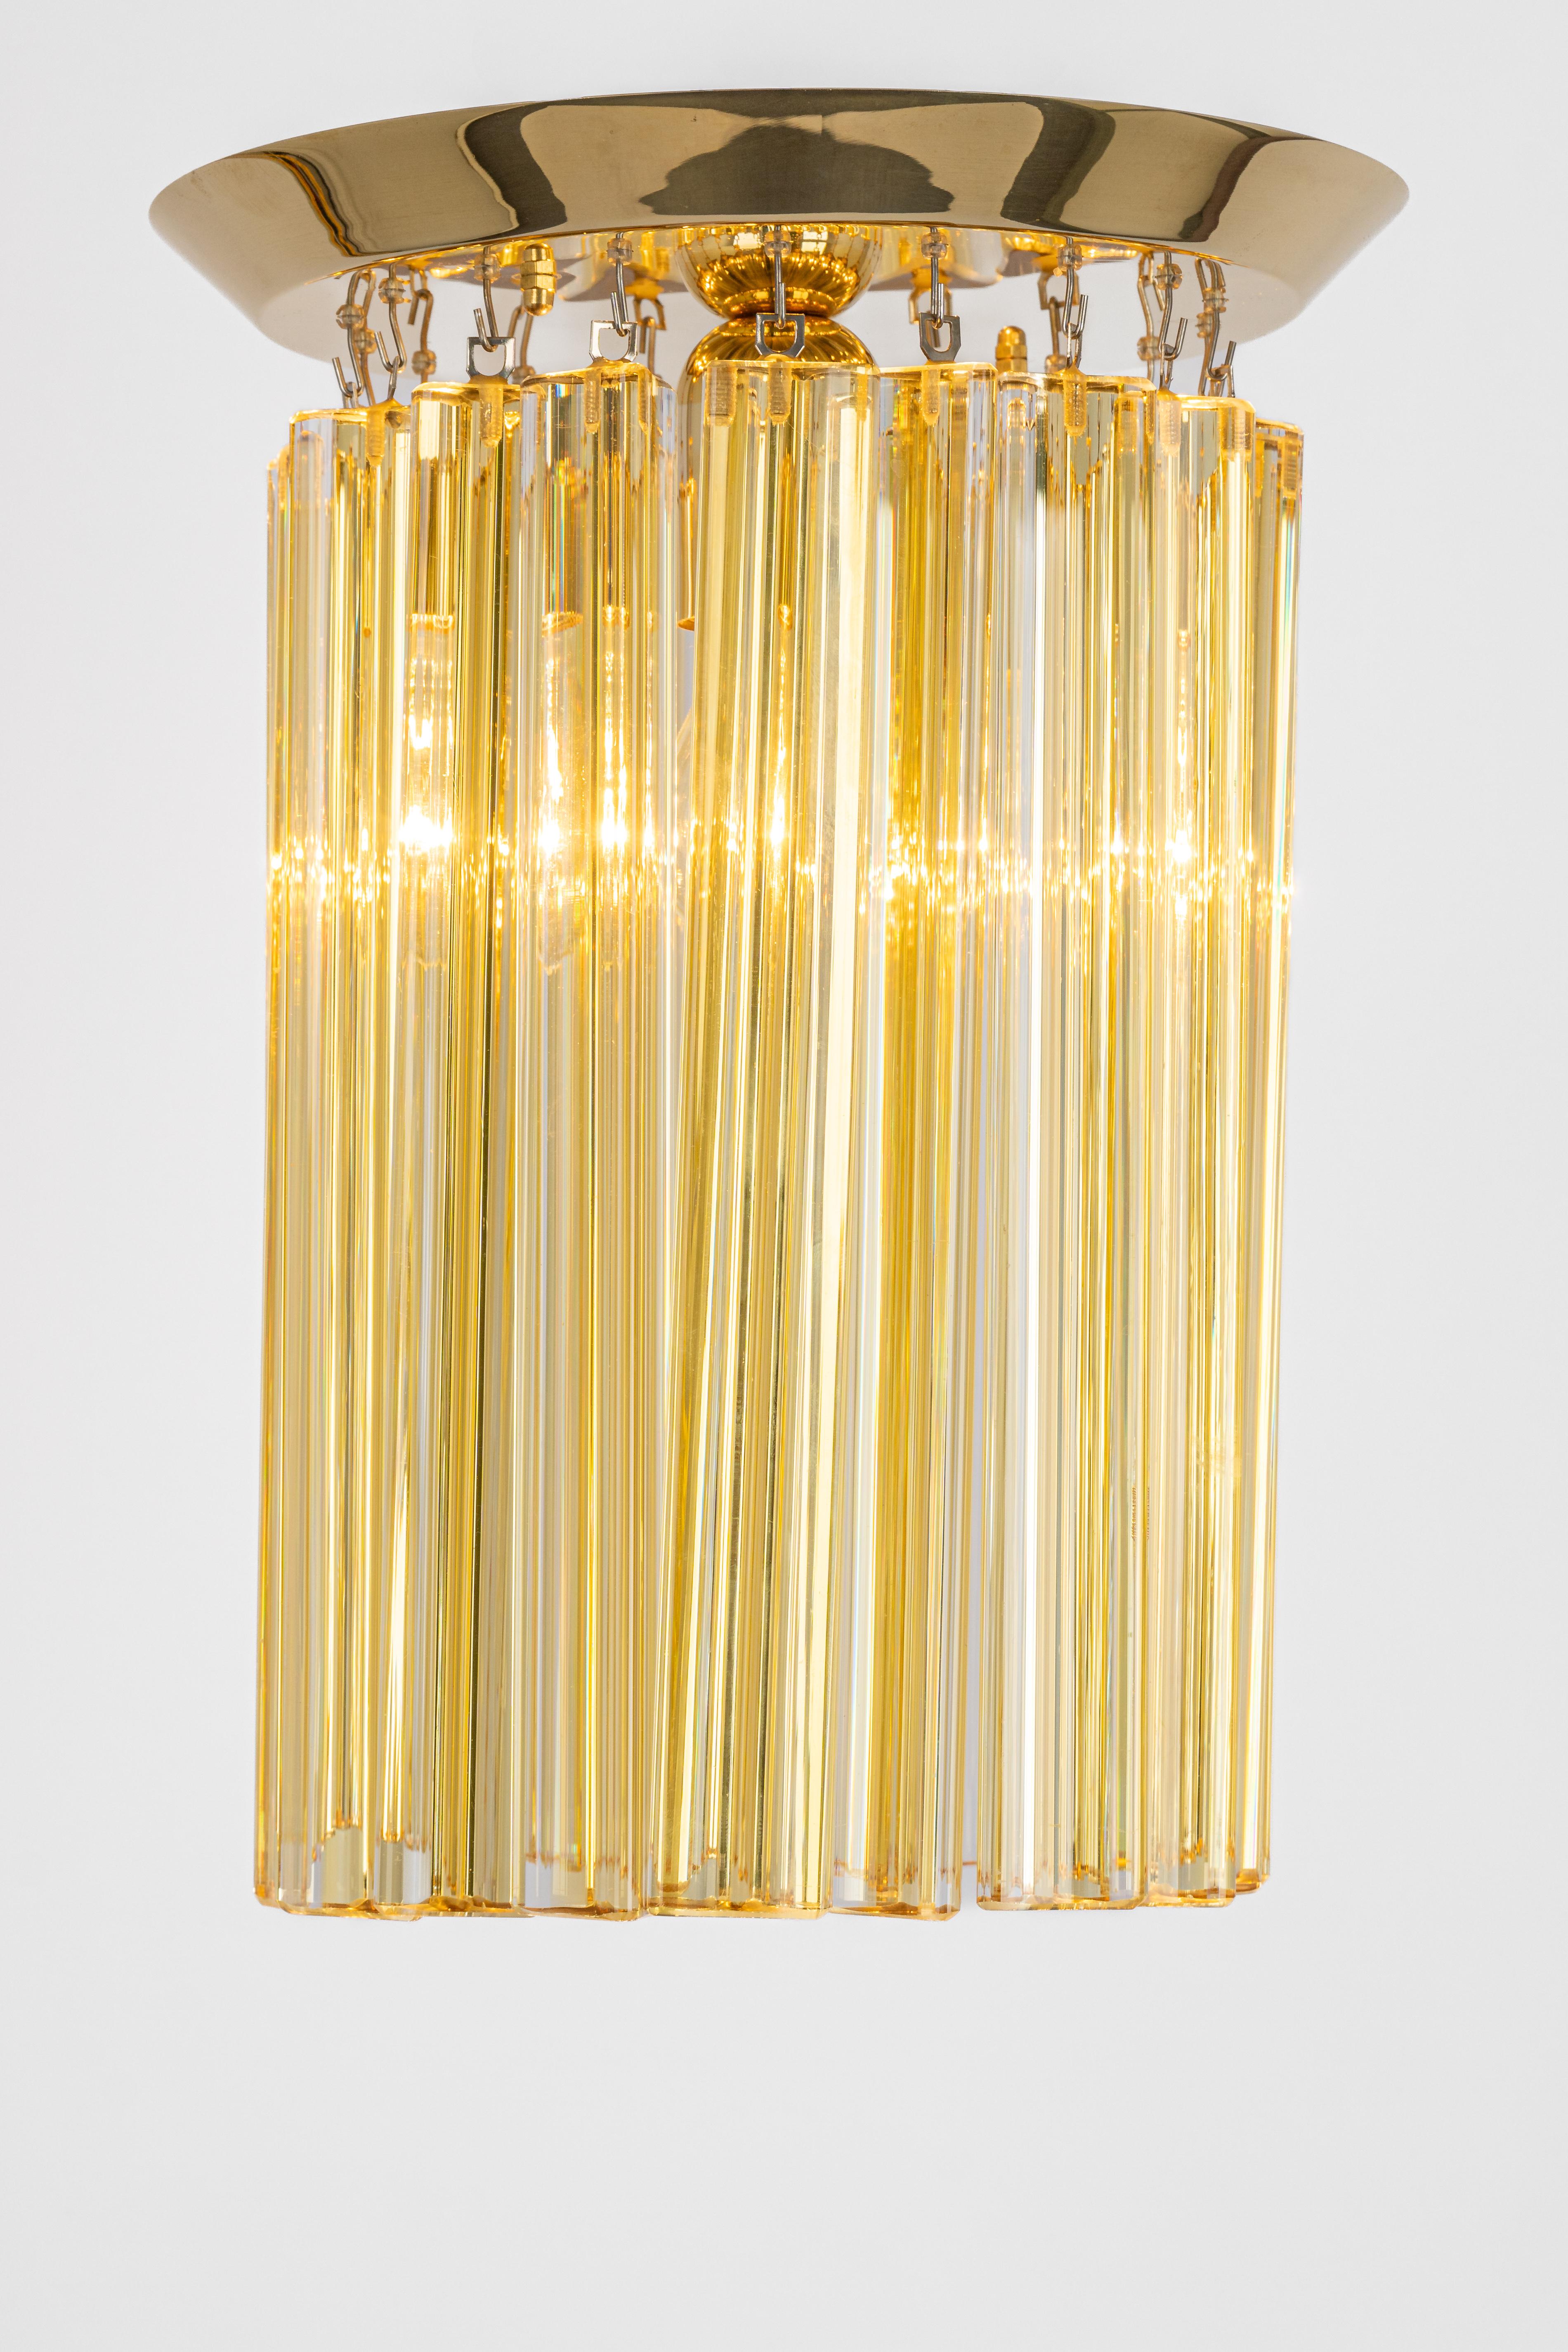 Brass Petite Murano Glass Flush Mount Light Design Venini for Kalmar, Austria, 1970s For Sale